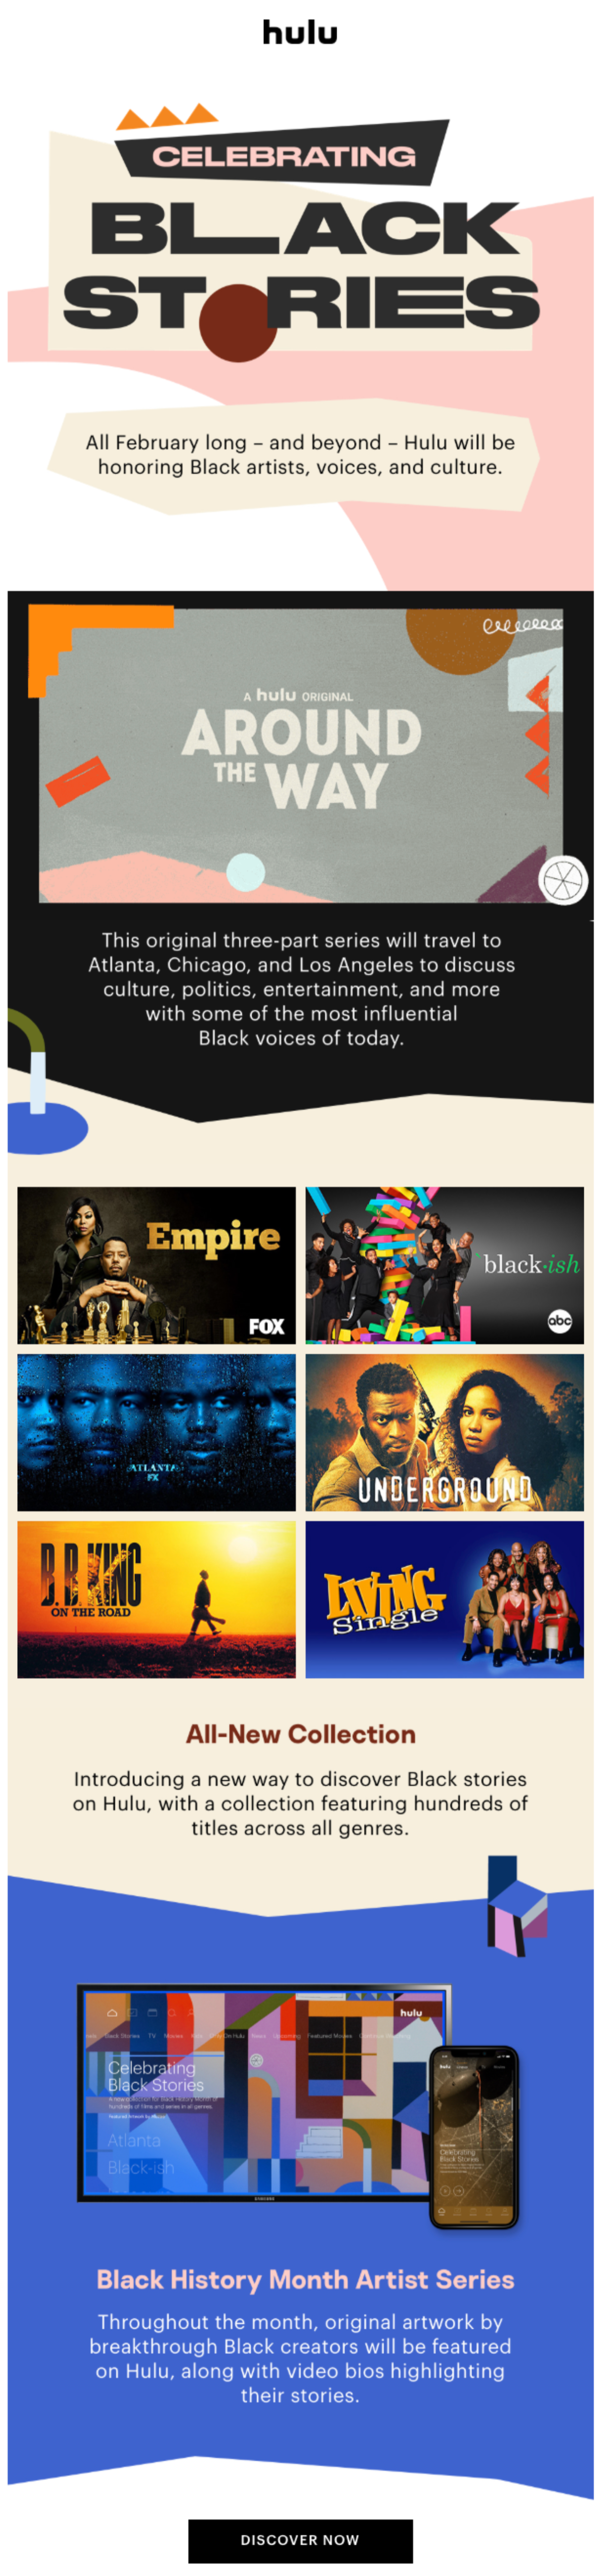 Hulu Black History Month